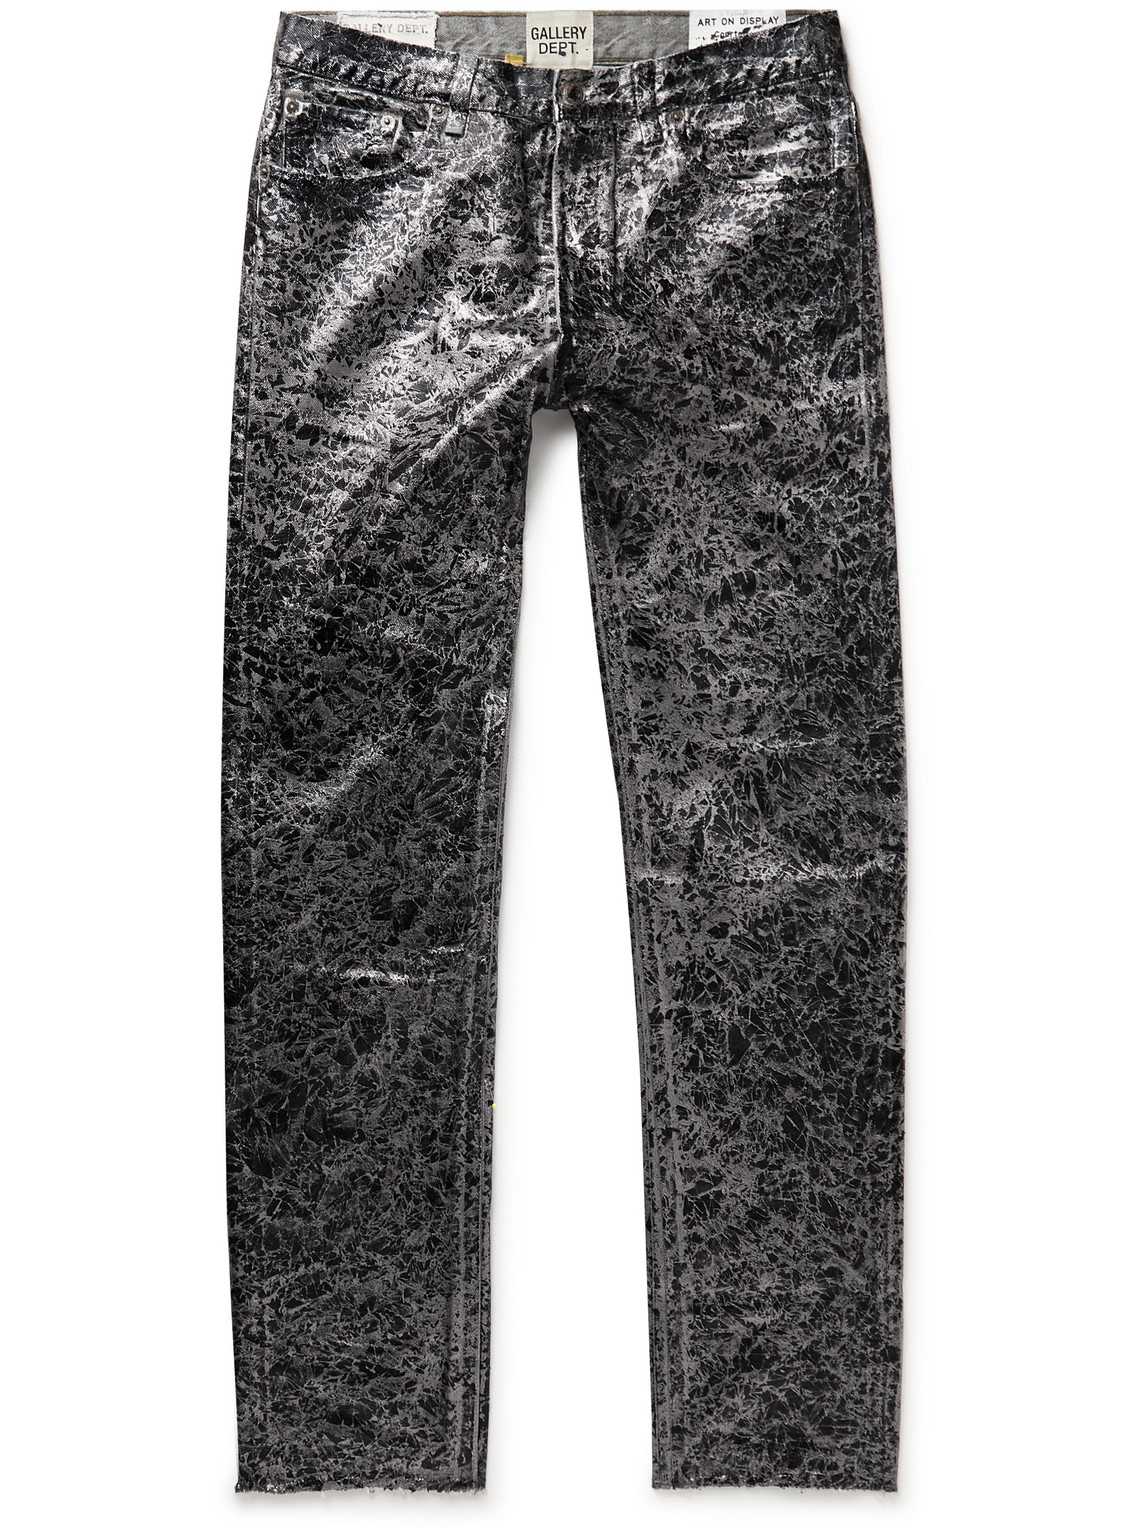 Gallery Dept. Analog 5001 Slim-fit Metallic Painted Jeans In Gray